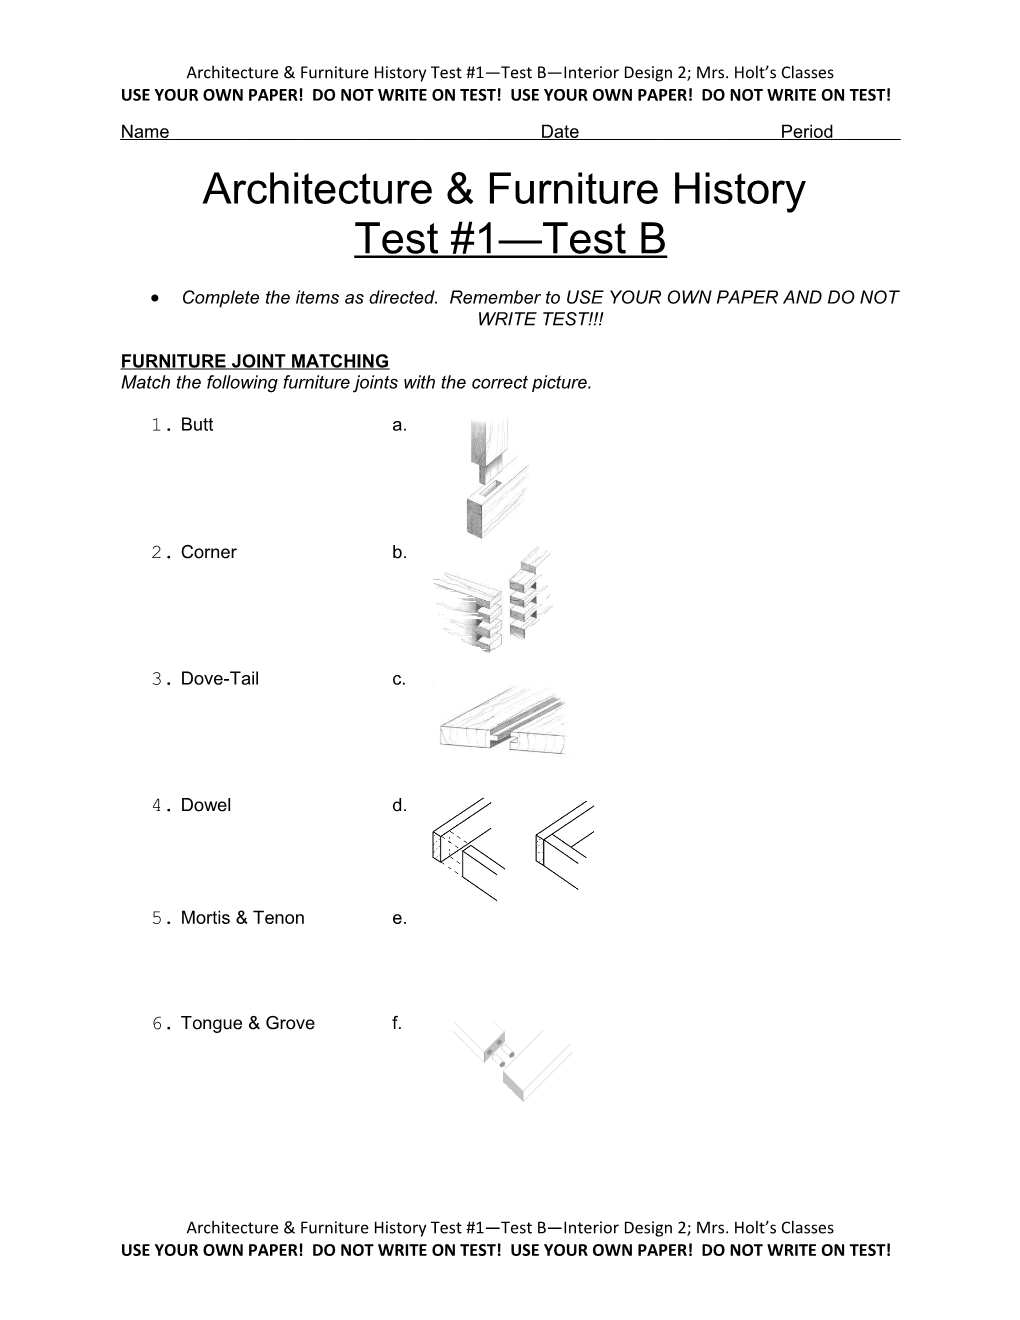 Architecture & Furniture History Test #1 Test B Interior Design 2; Mrs. Holt S Classes